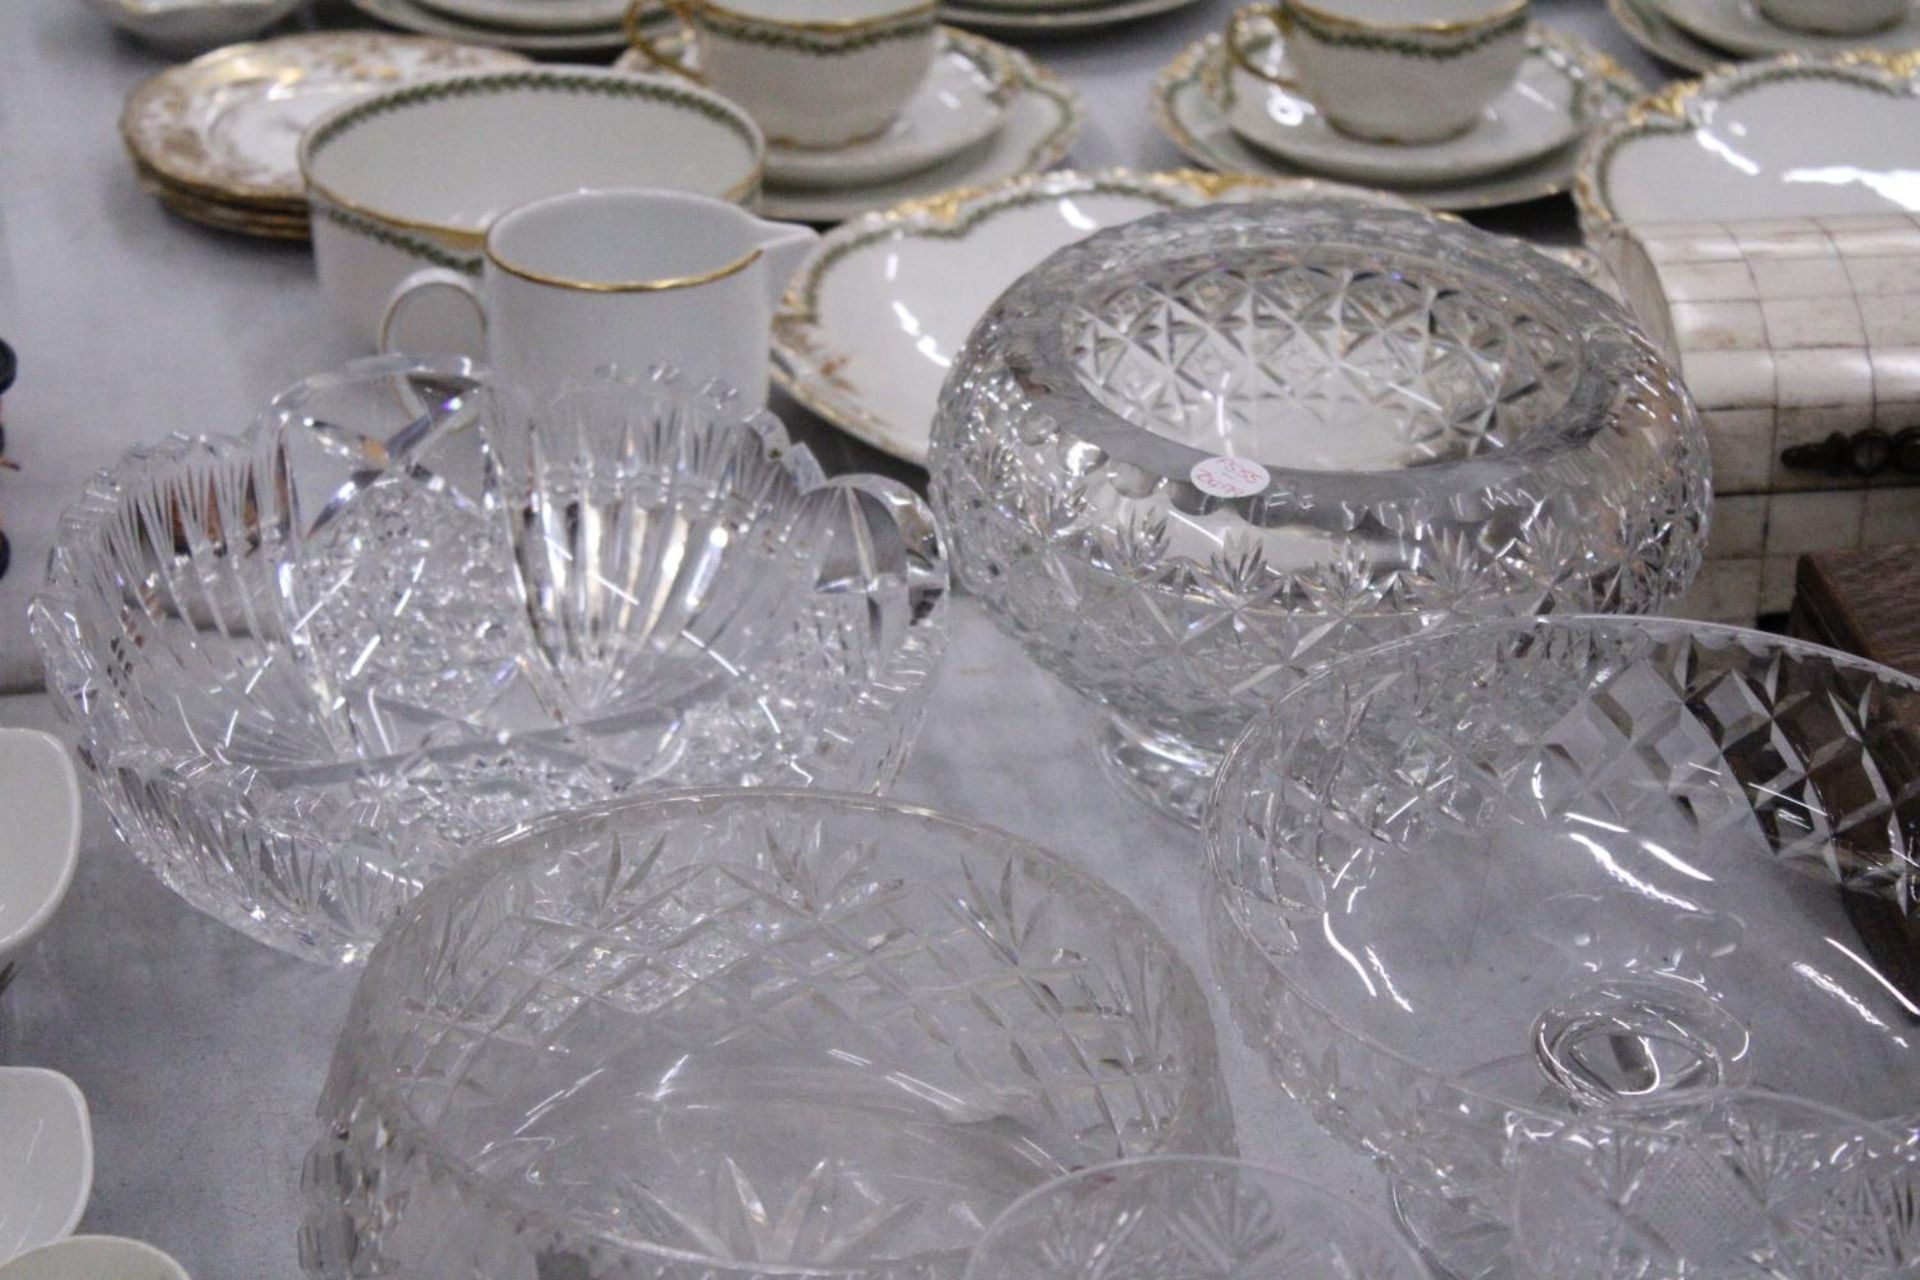 A LARGE QUANTITY OF GLASSWARE TO INCLUDE BOWLS, VASES, WINE GLASSES, ETC - Bild 5 aus 6